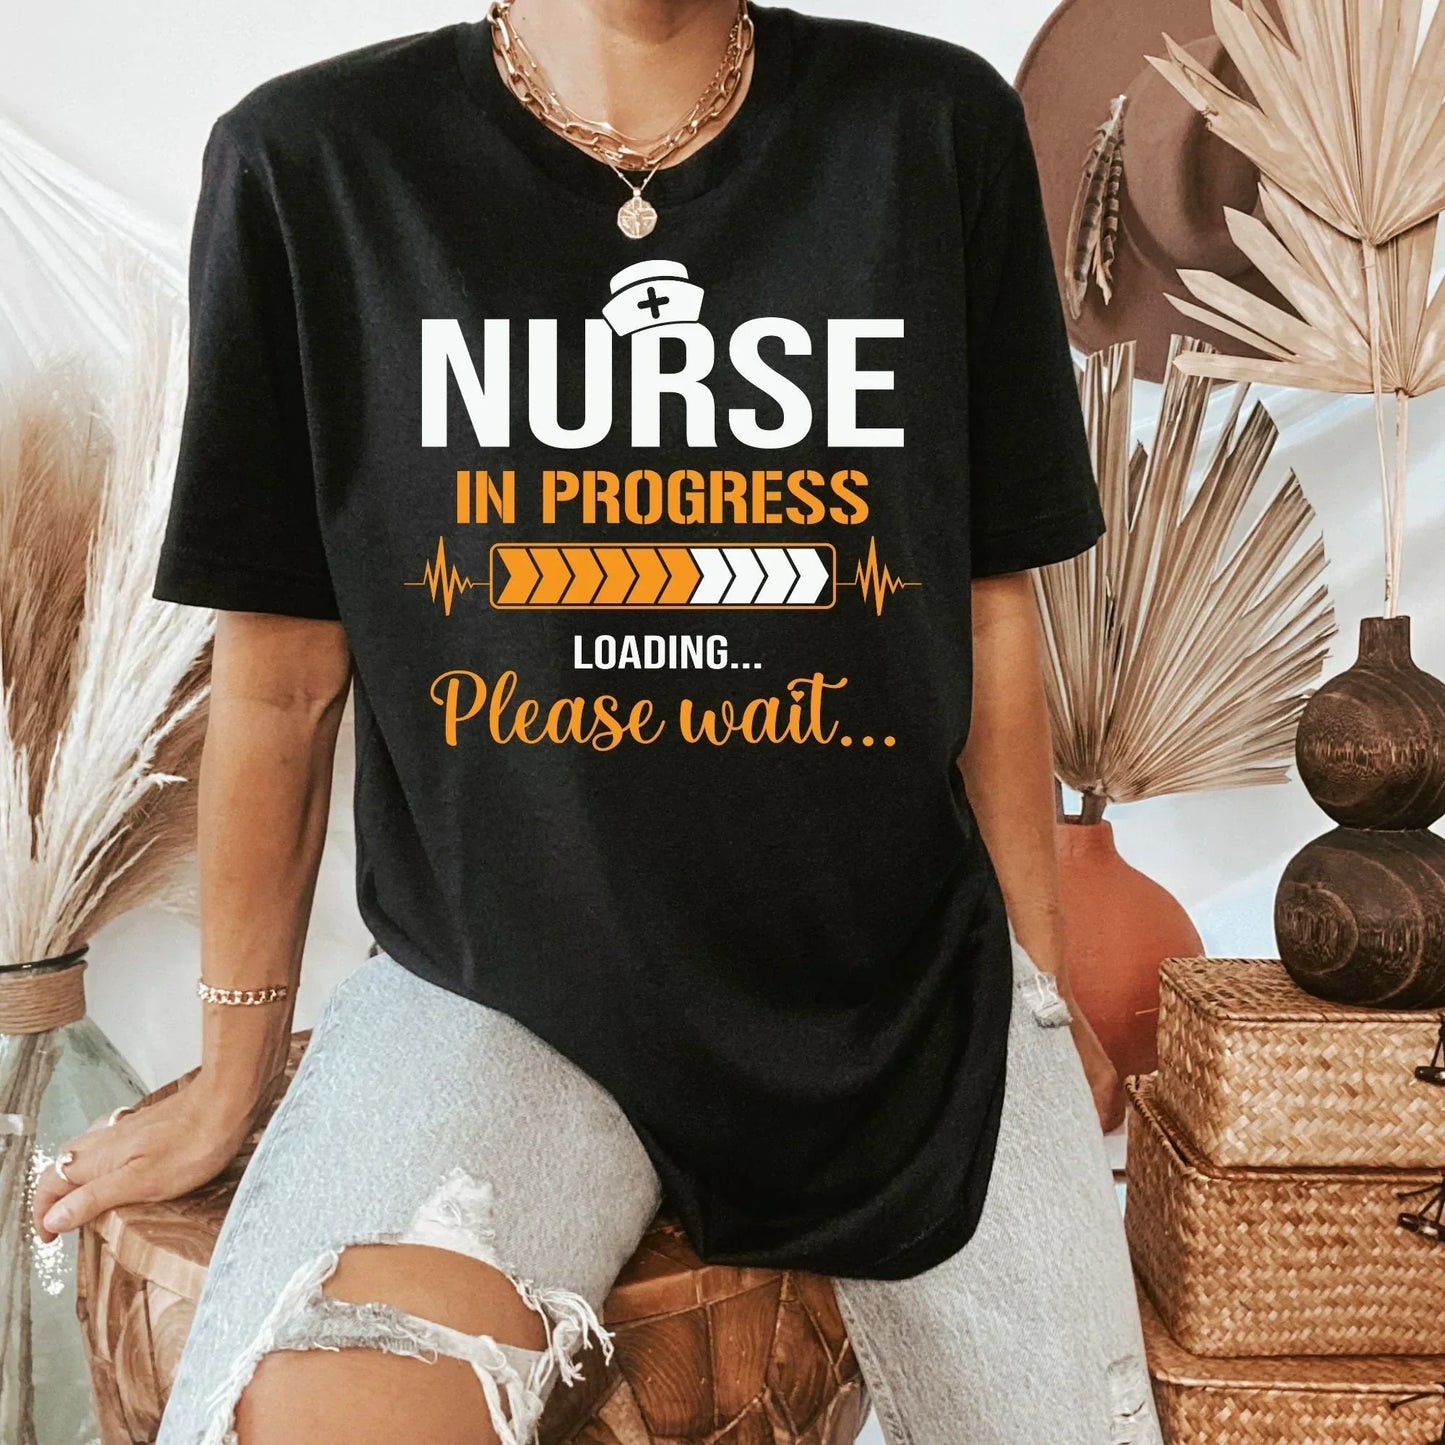 Nursing Student sweatshirt, Labor and Delivery Nurse, ER nurse shirt, Emergency Nurse, Gift for Future Nurse, ICU Nurse Shirt, Nurse Hoodie